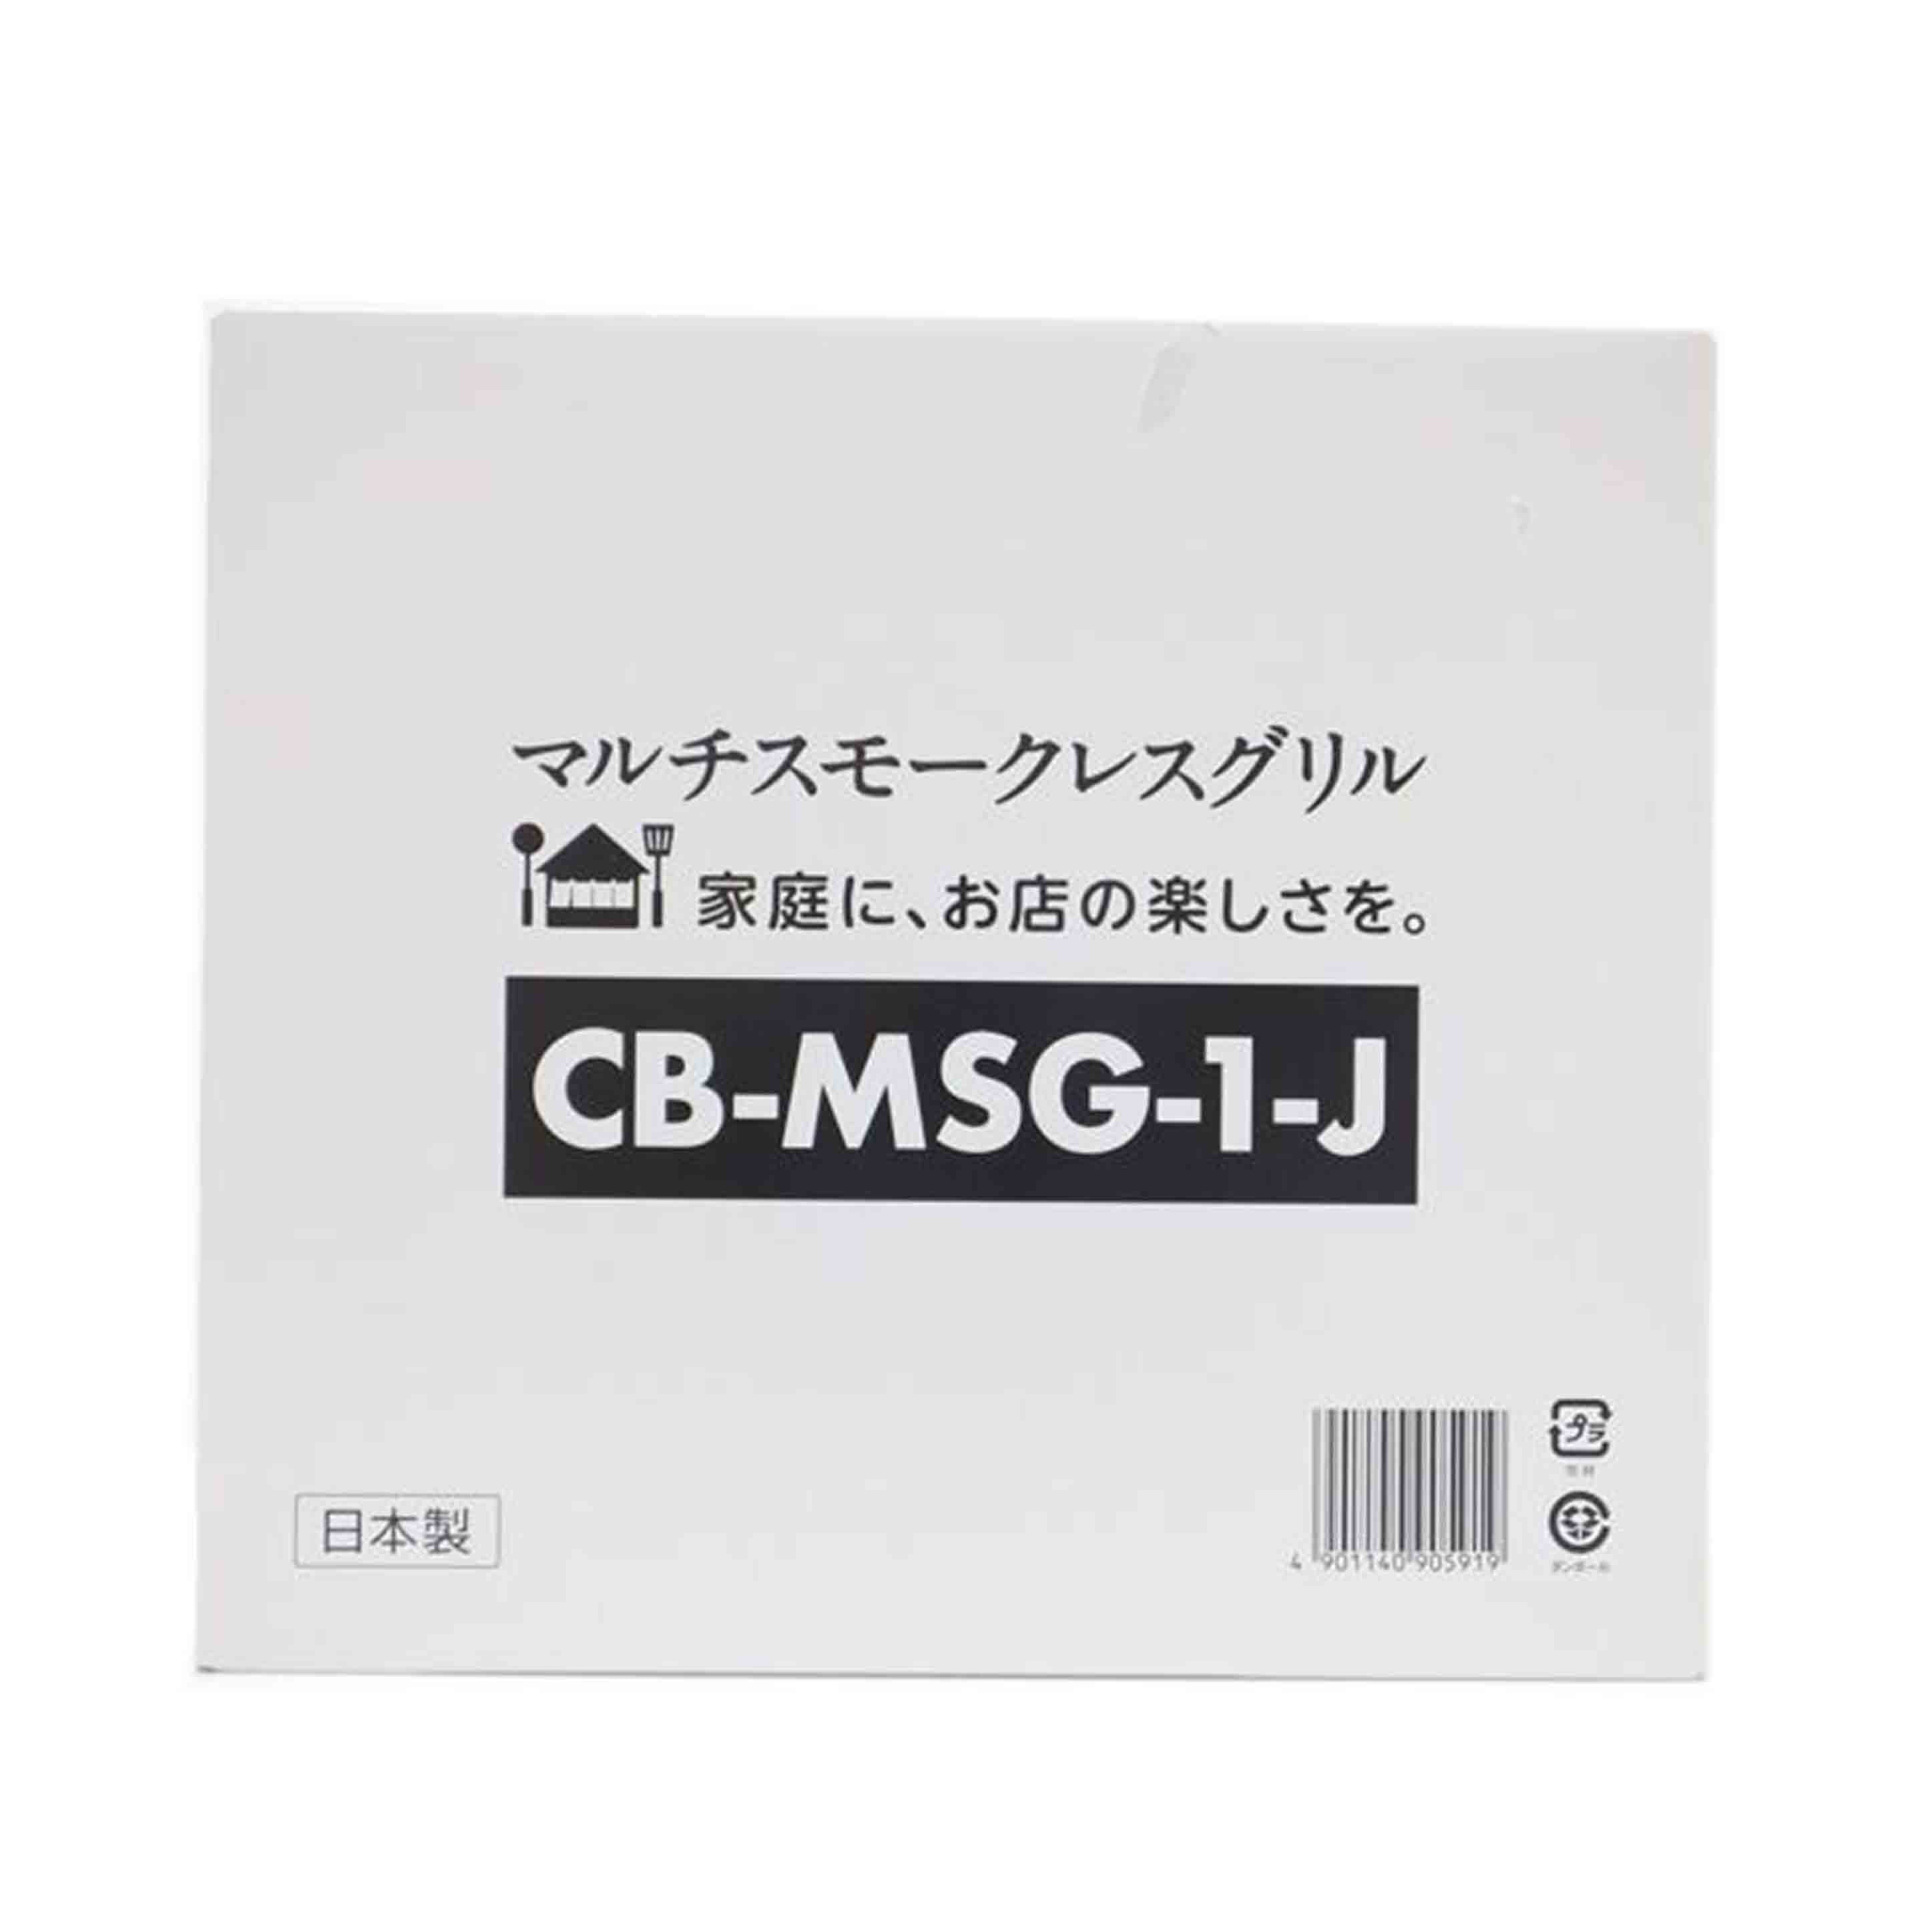 Iwatani イワタニ/マルチスモークレスグリル/CB-MSG-1-J//Sランク/88